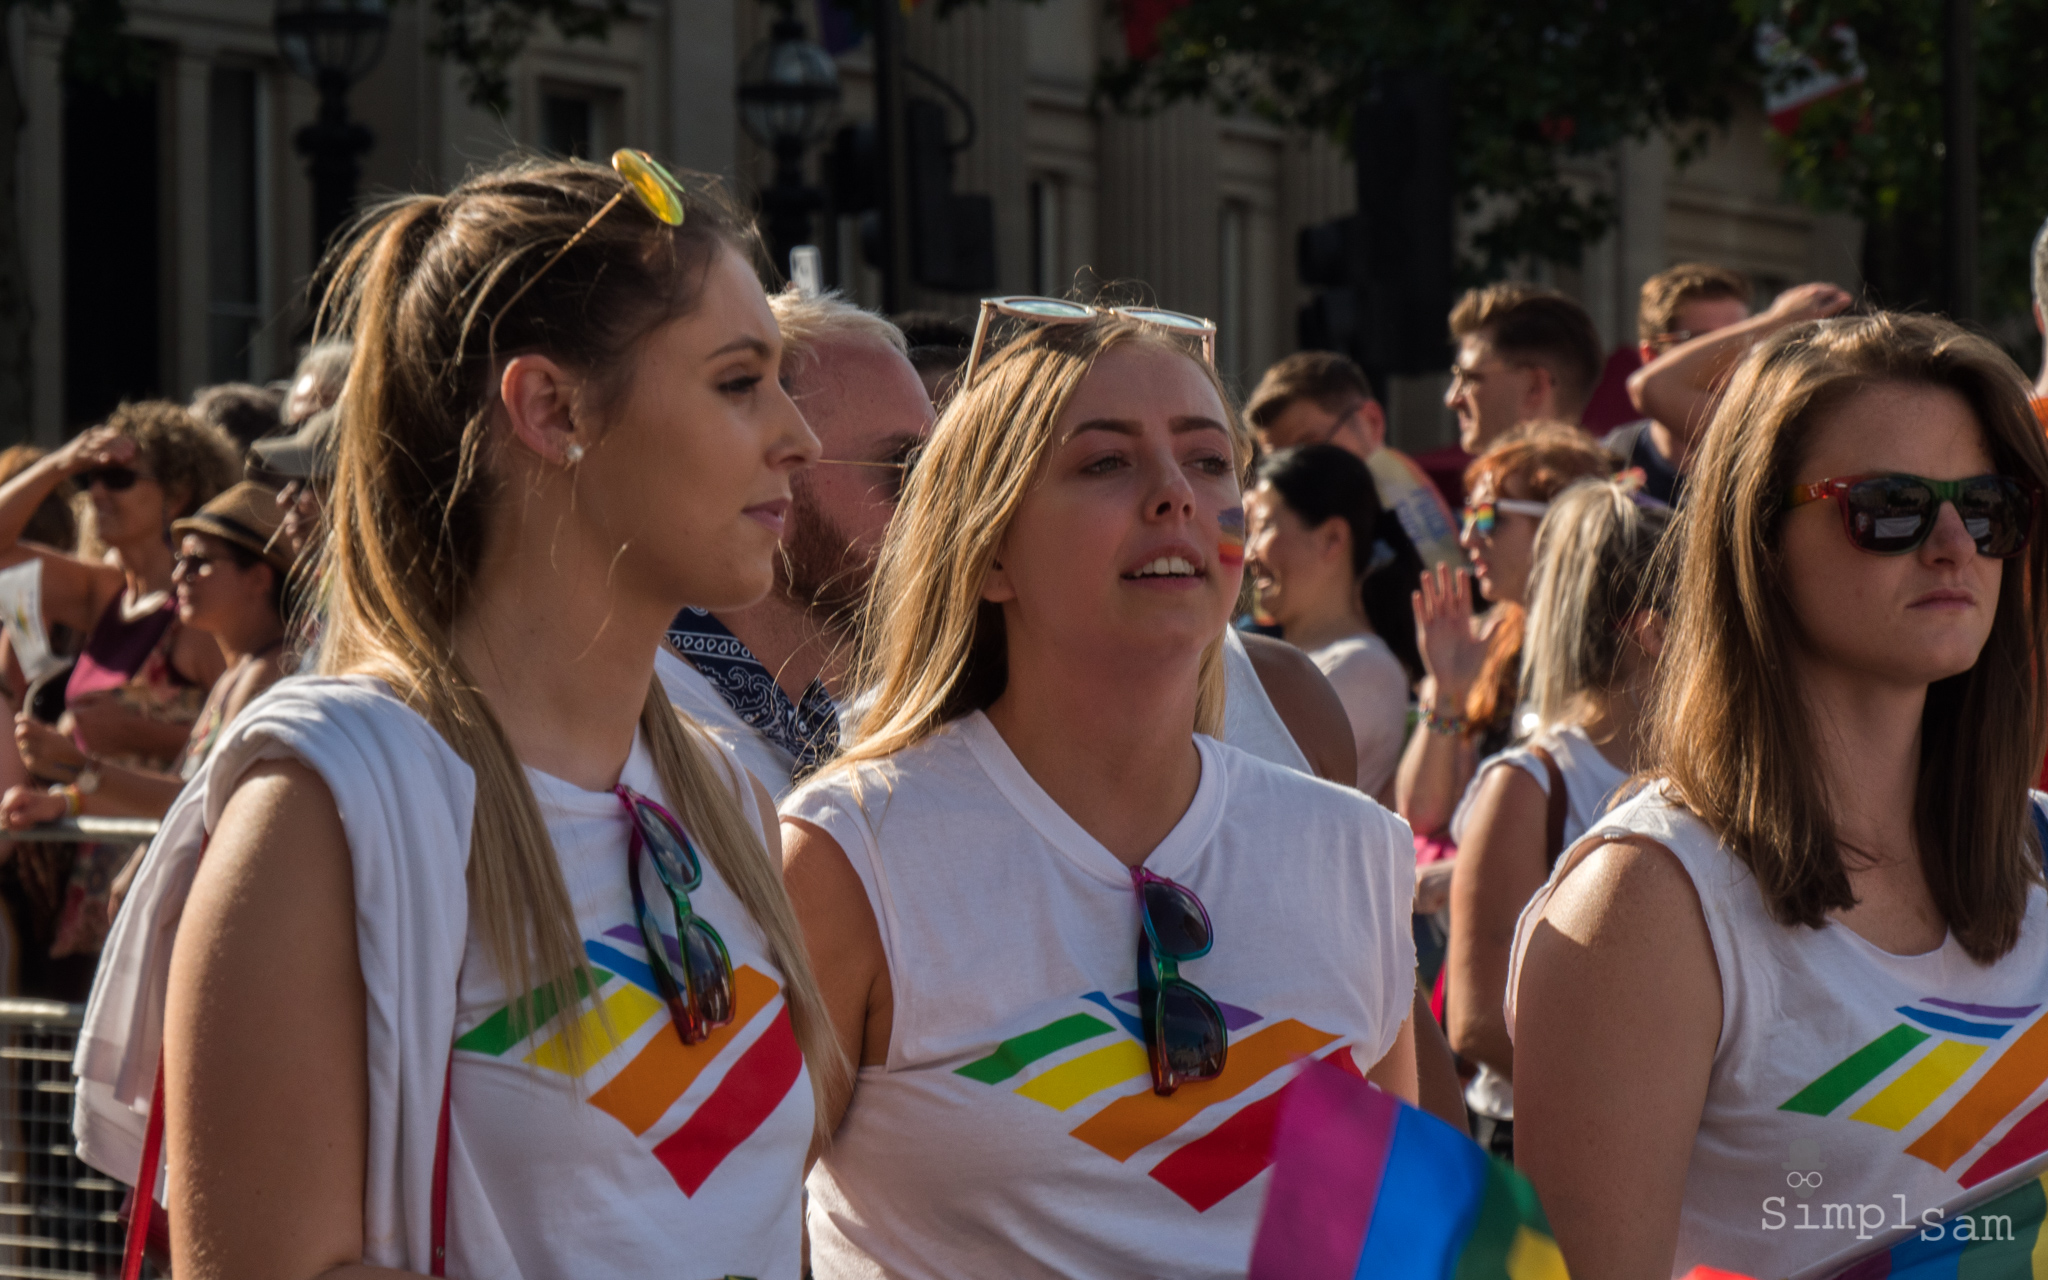 Pride London 2018